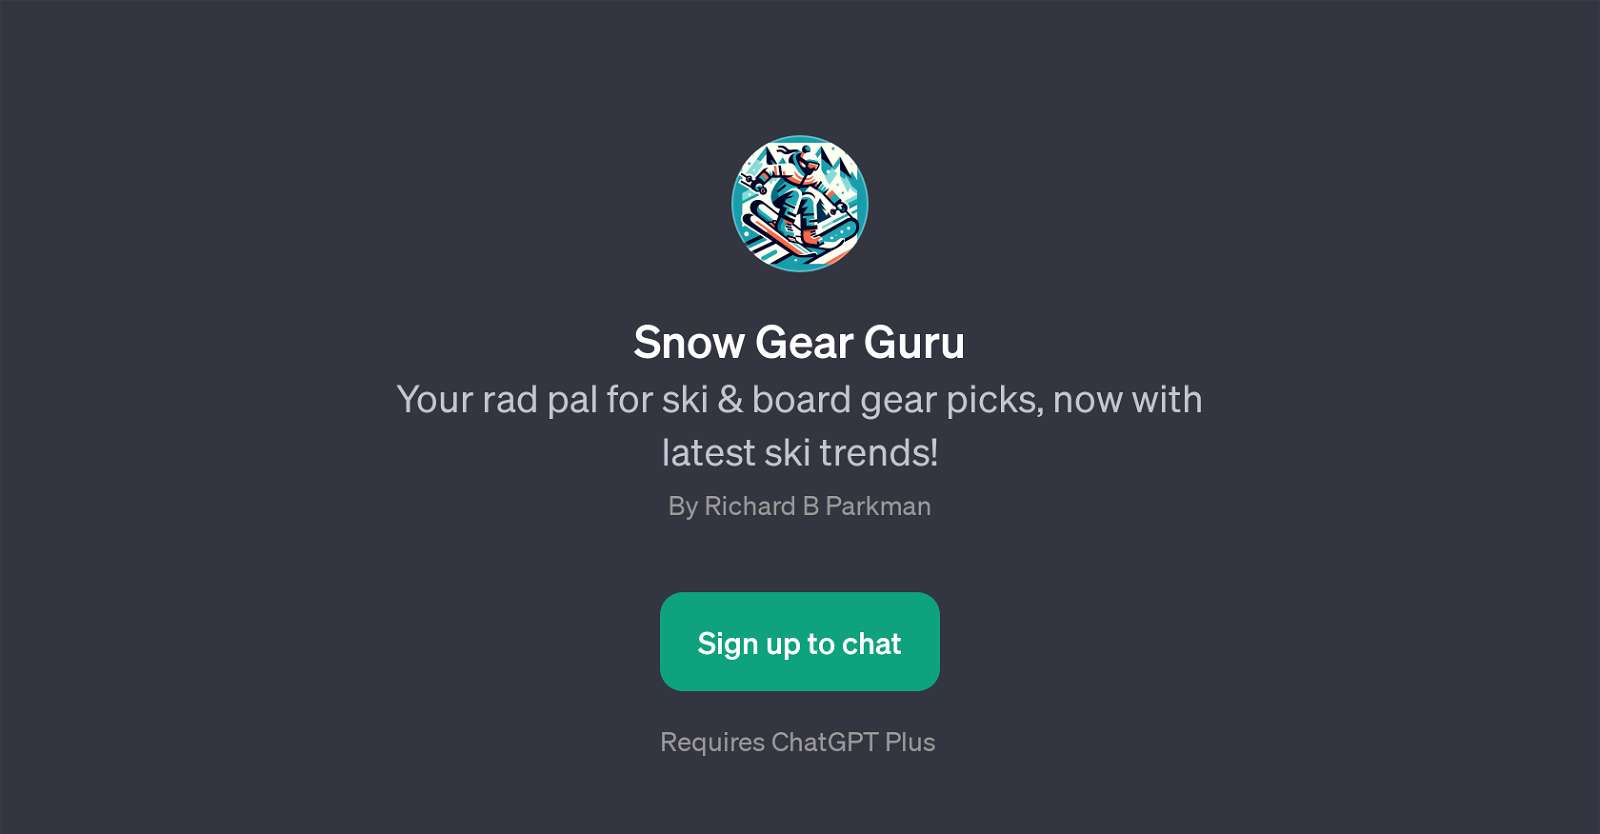 Snow Gear Guru website